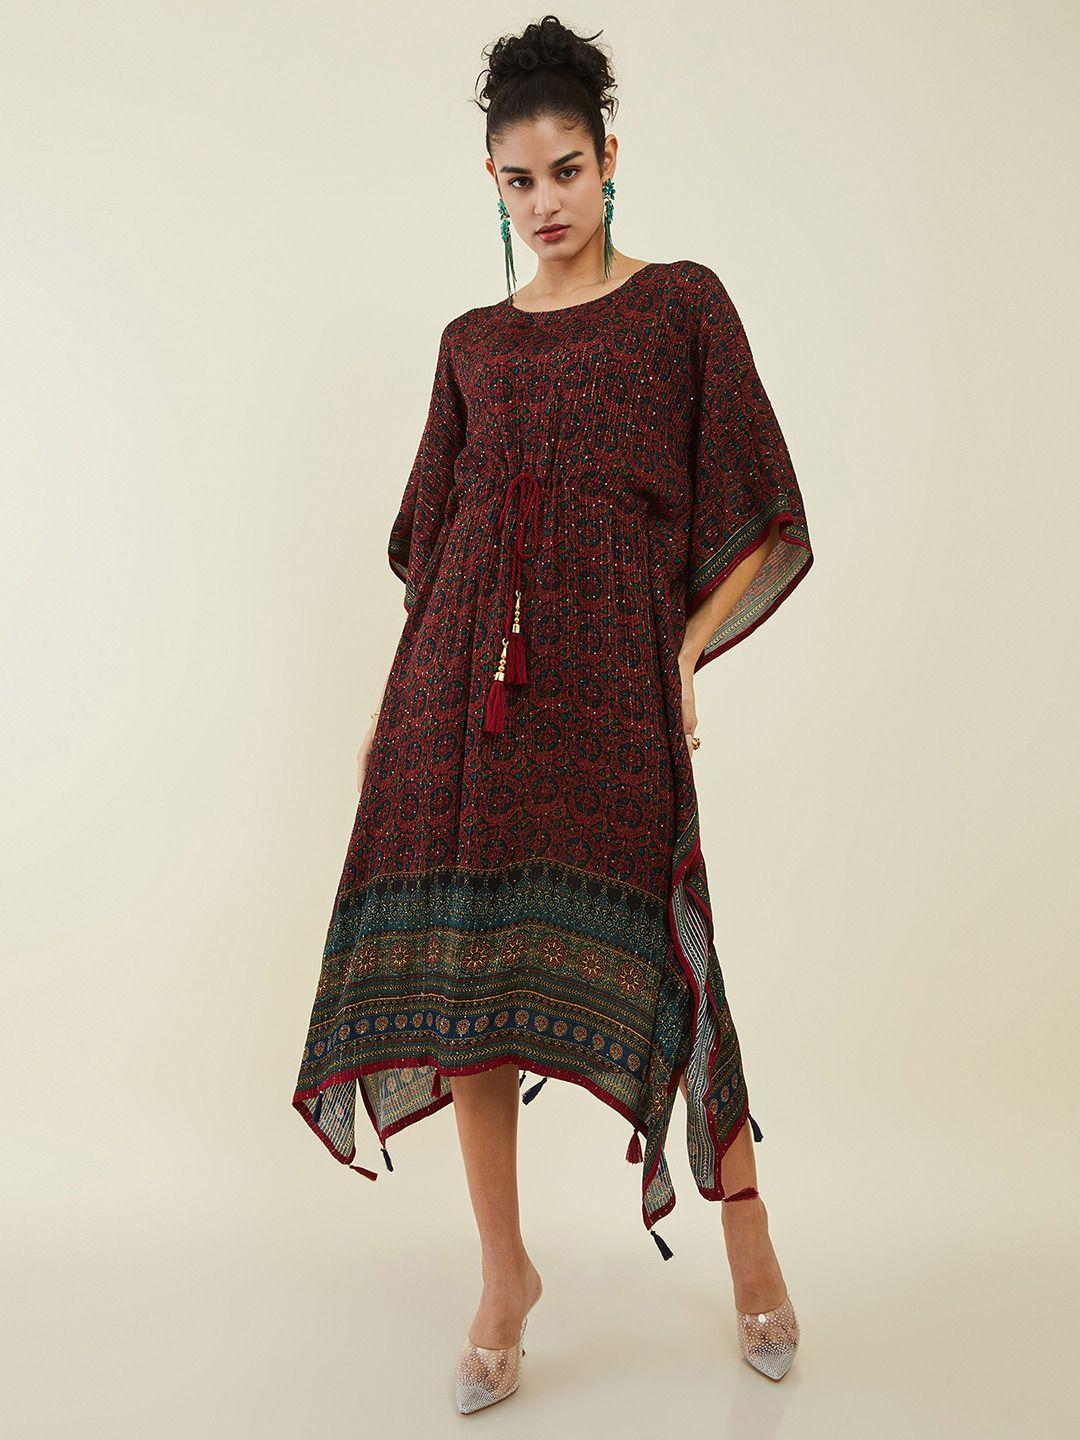 soch-maroon-ethnic-motifs-printed-sequined-kaftan-midi-ethnic-dress